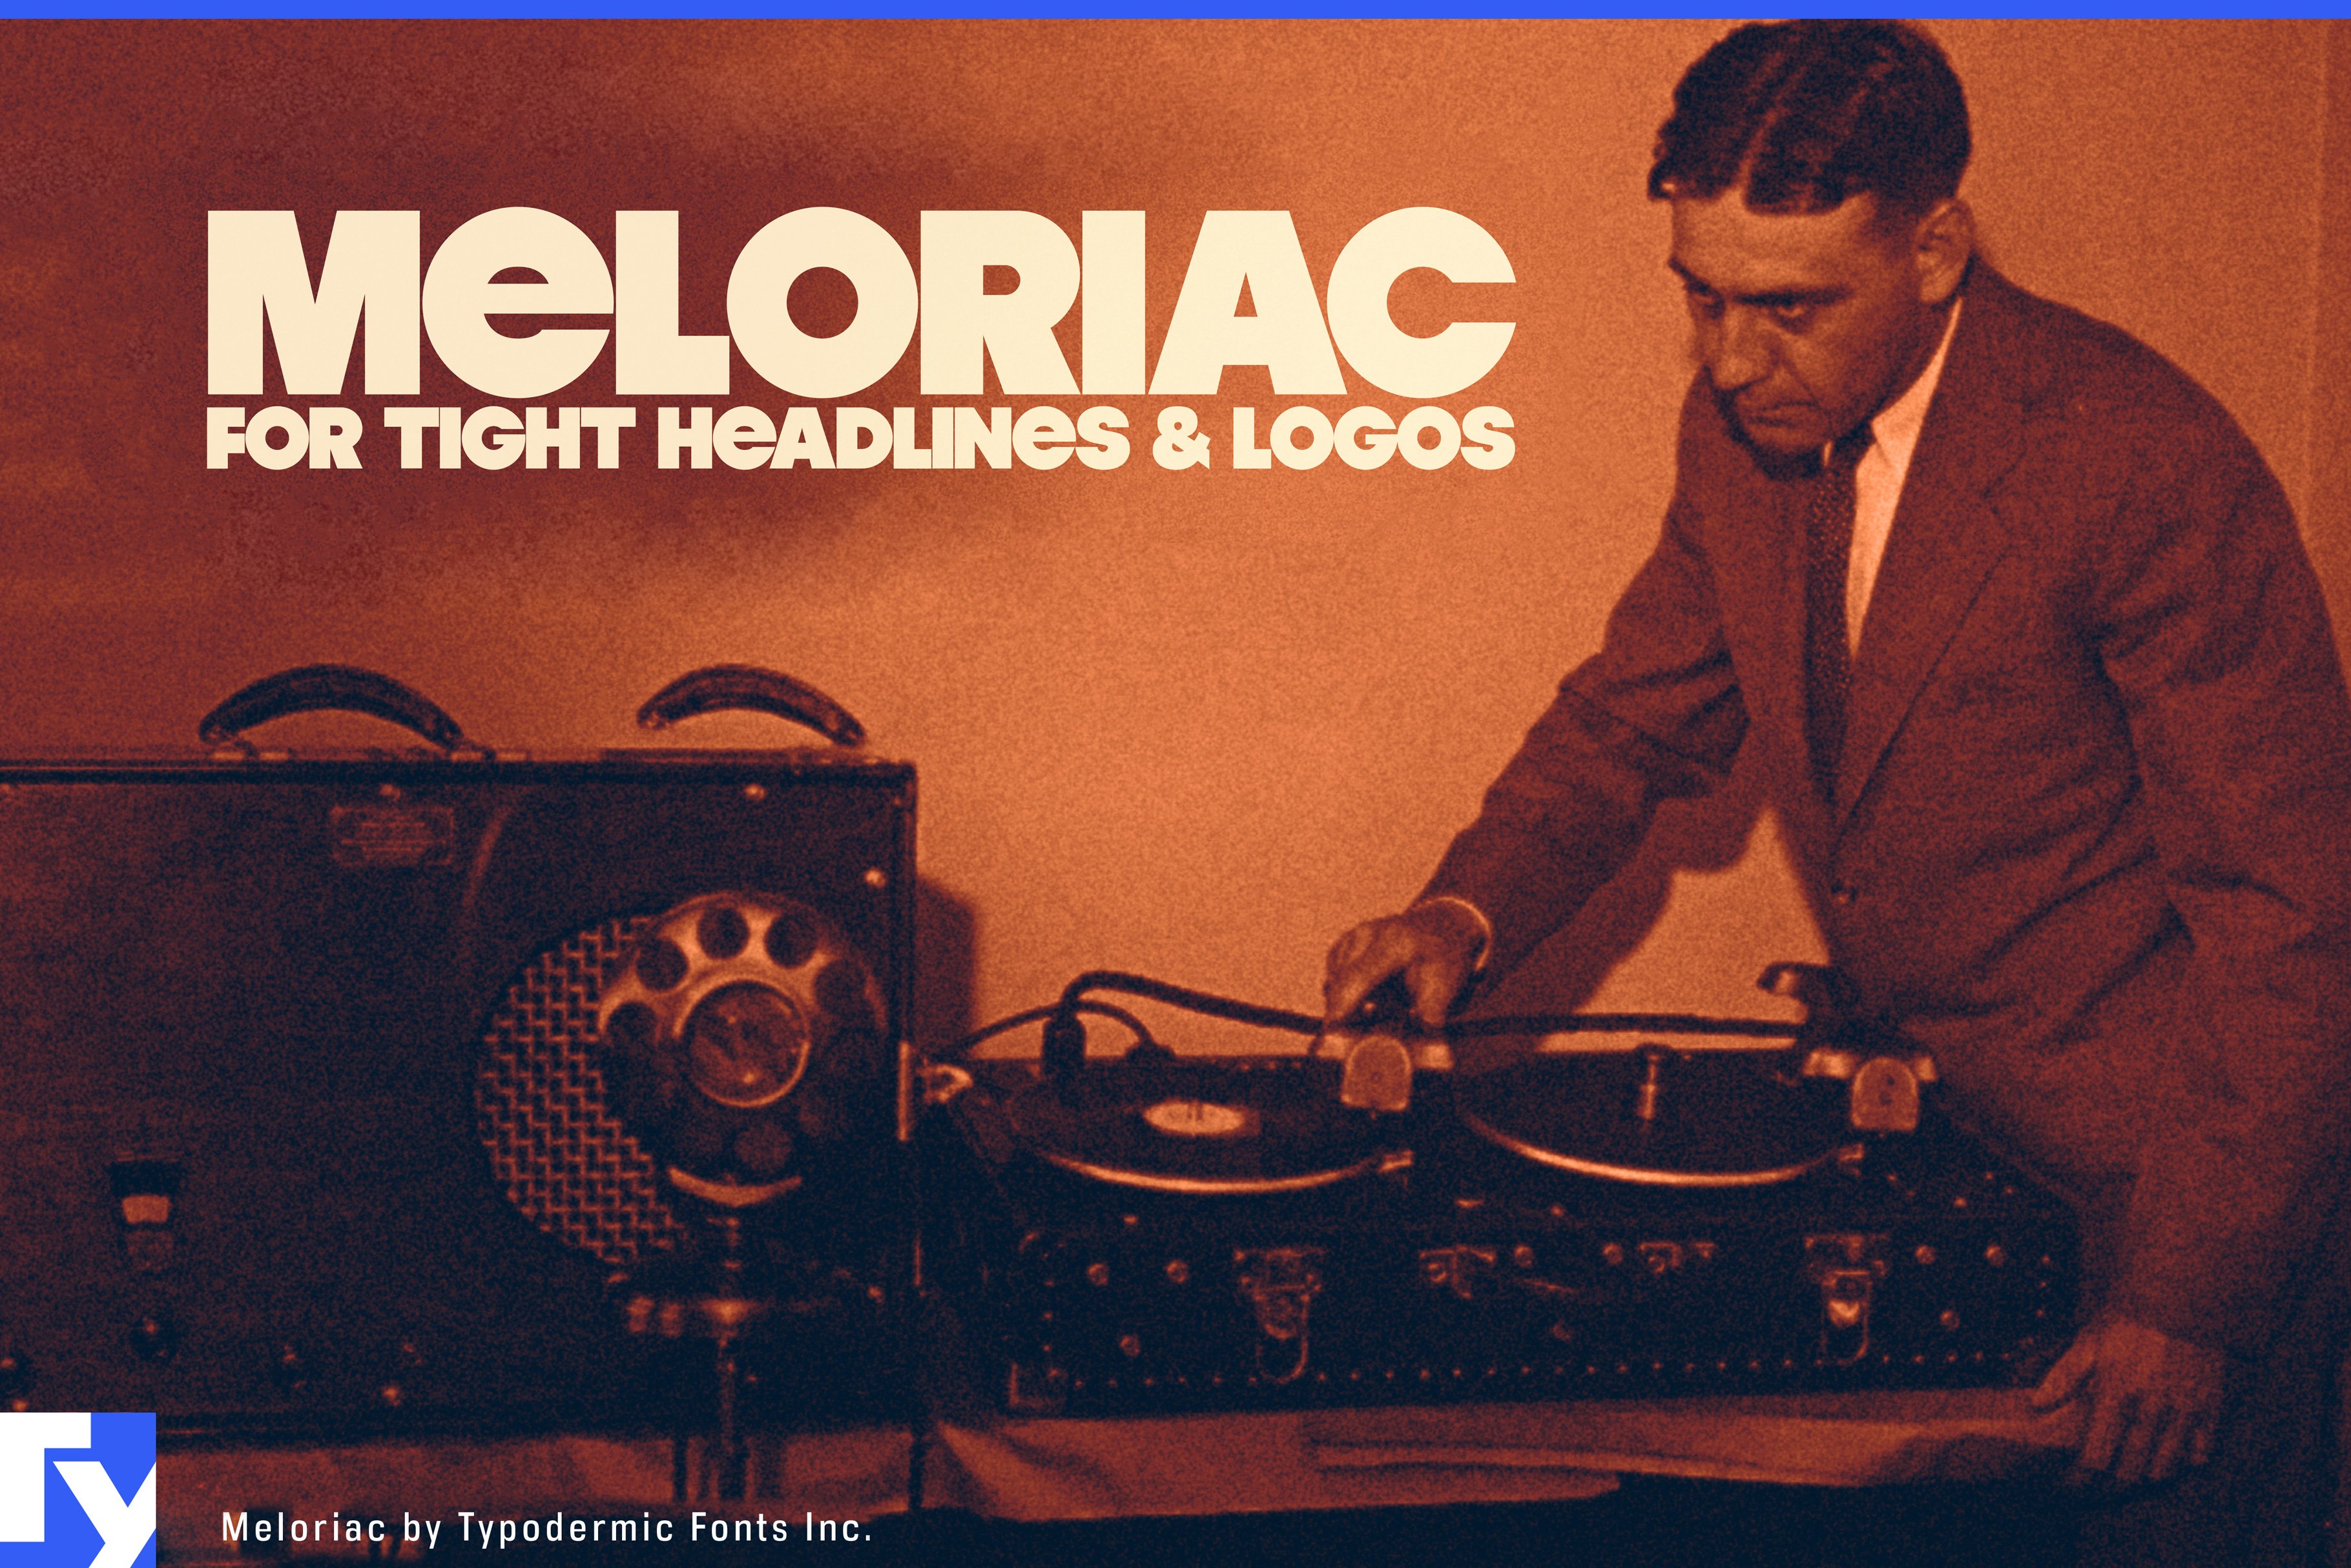 Meloriac cover image.